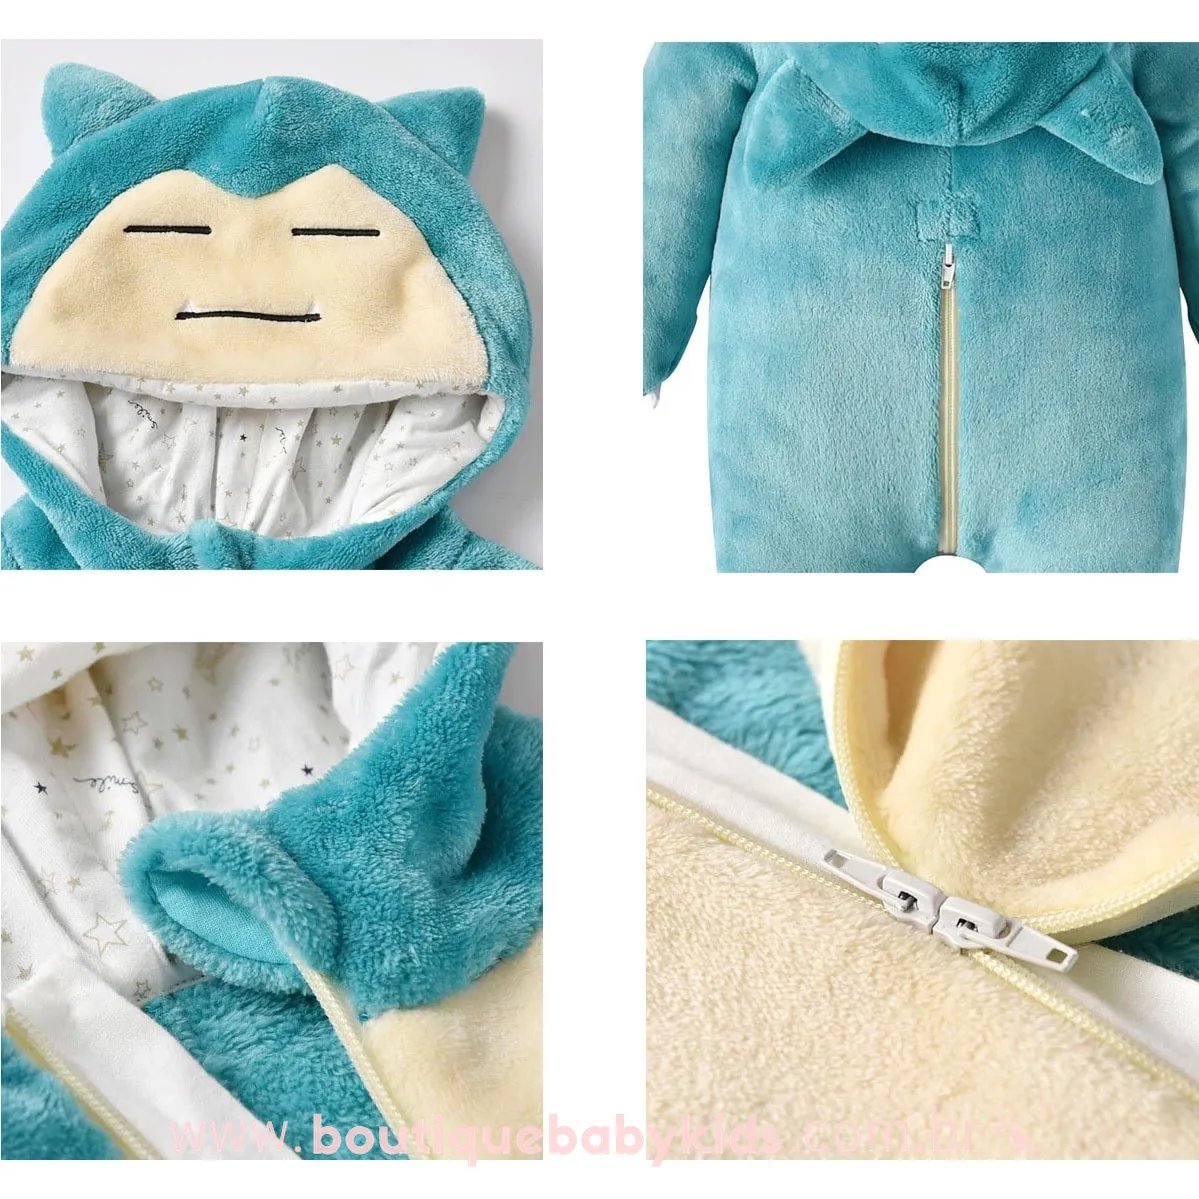 Macacão Bebê Fantasia Bichinho Pokémon Snorlax – Boutique Baby Kids